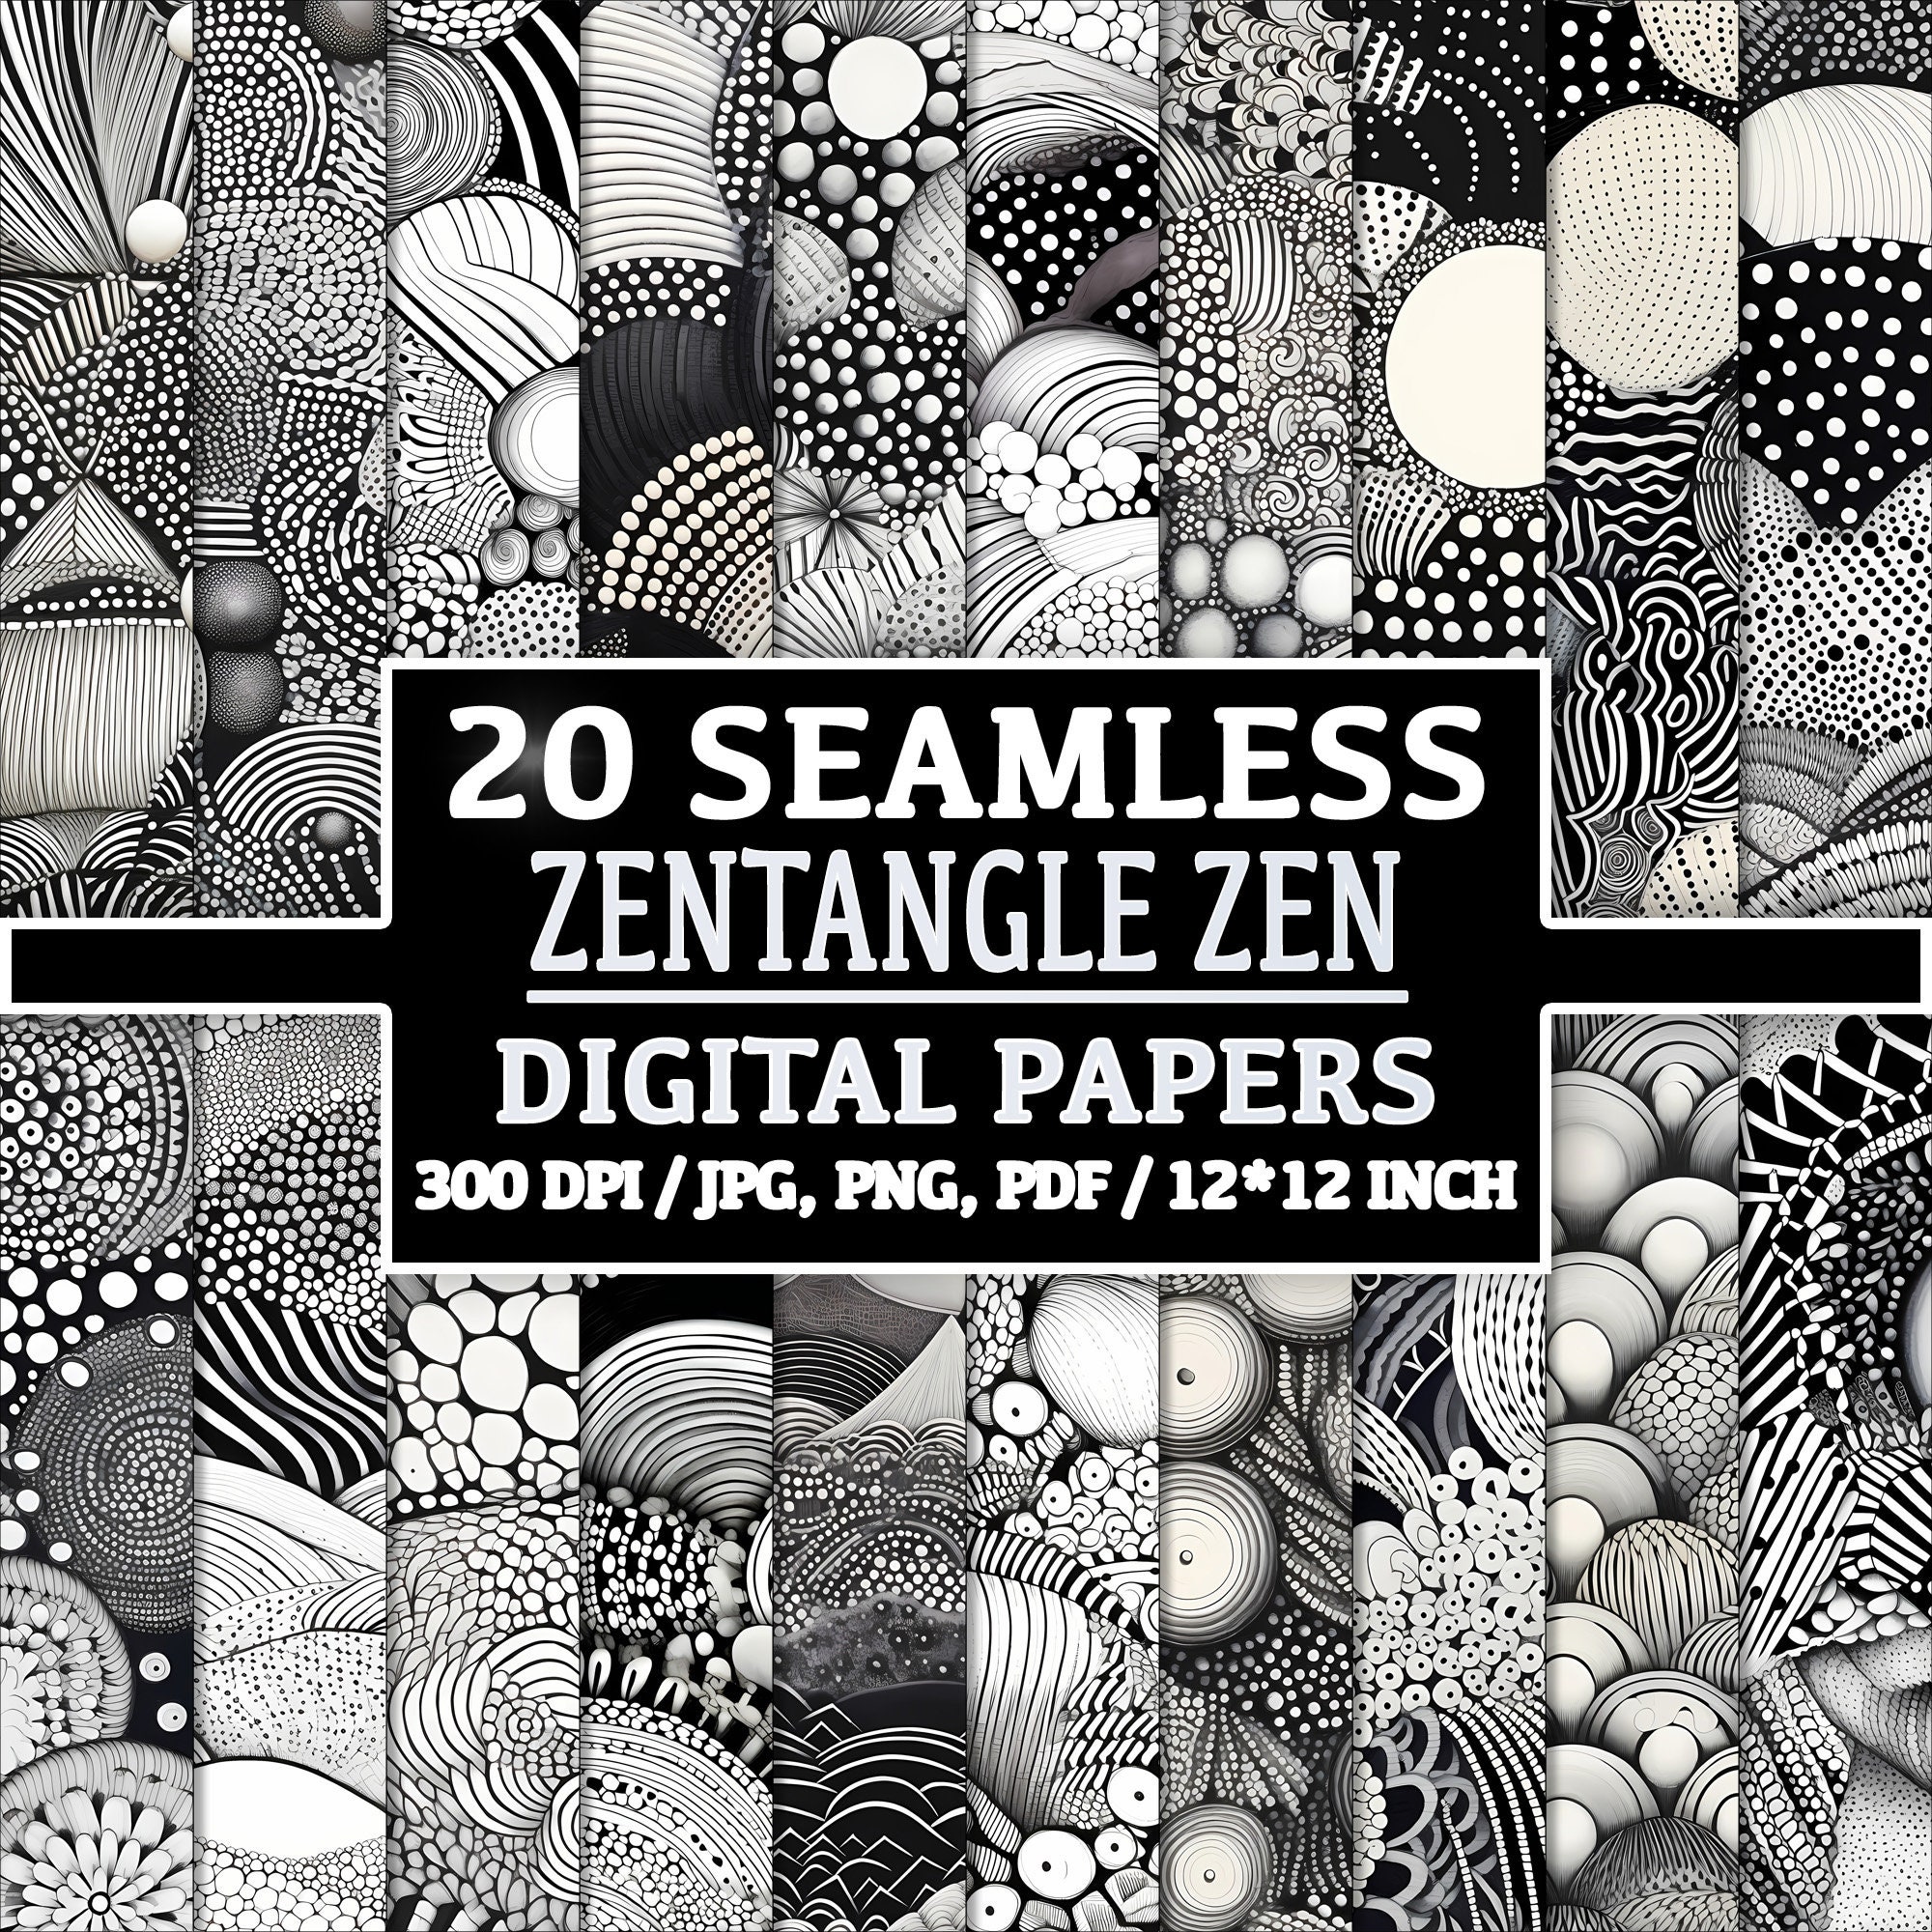 Zentangle Tool Set (Pack of 12)